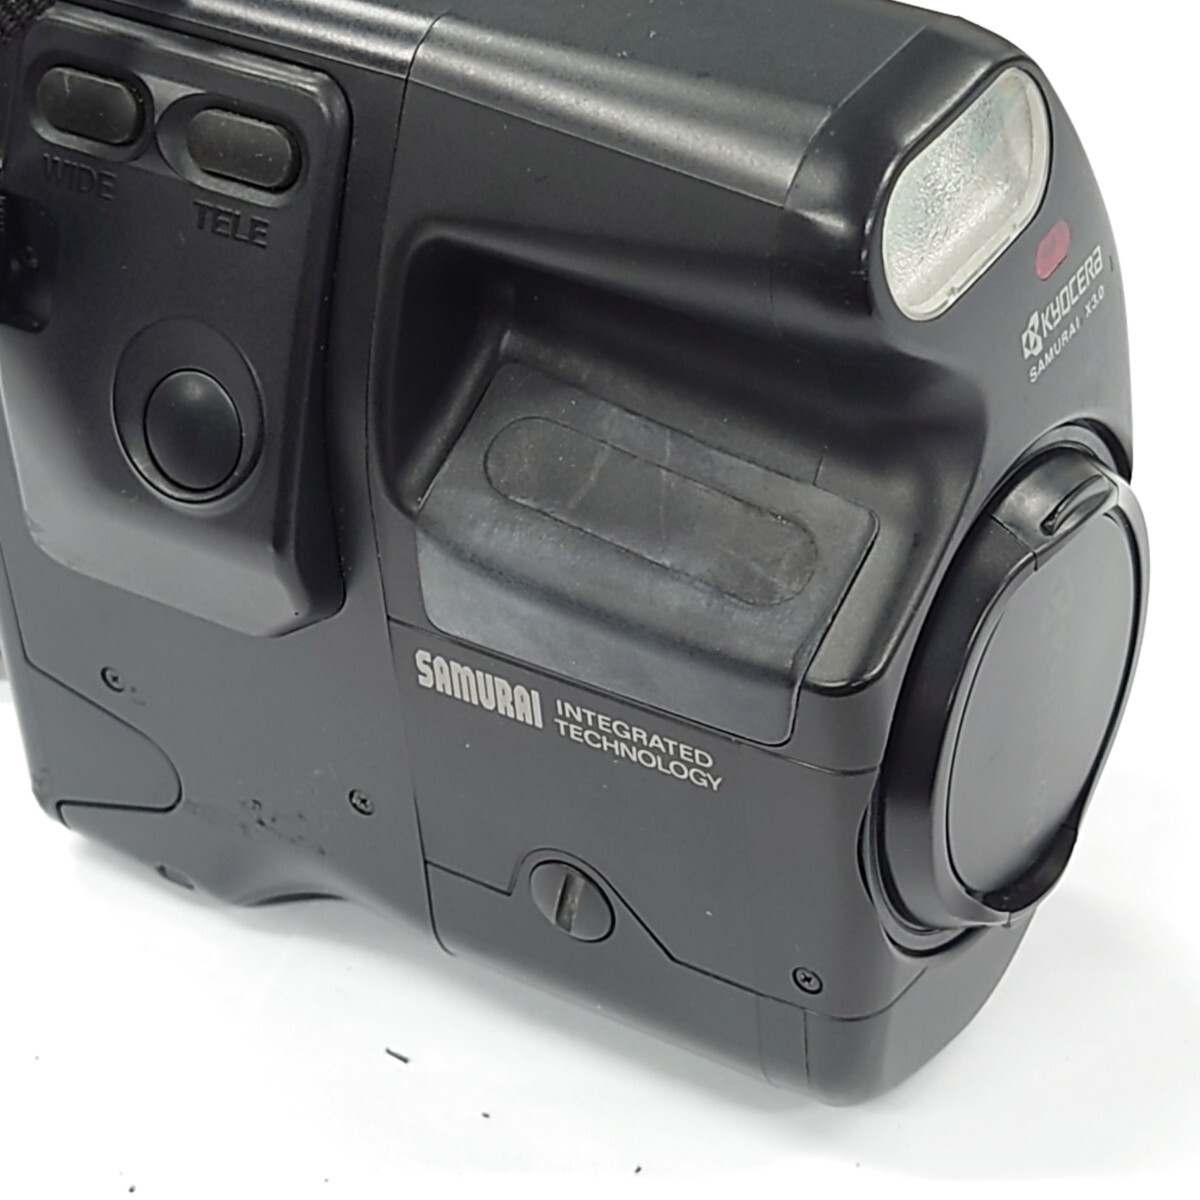 I804 フィルムカメラ KYOCERA SAMURAI ×3.0 AUTOMATIC FOCUSING KYOCERA ZOOM LENS f=25mm-75mm 1:3.5 -4.3 中古 ジャンク品 訳あり_画像9